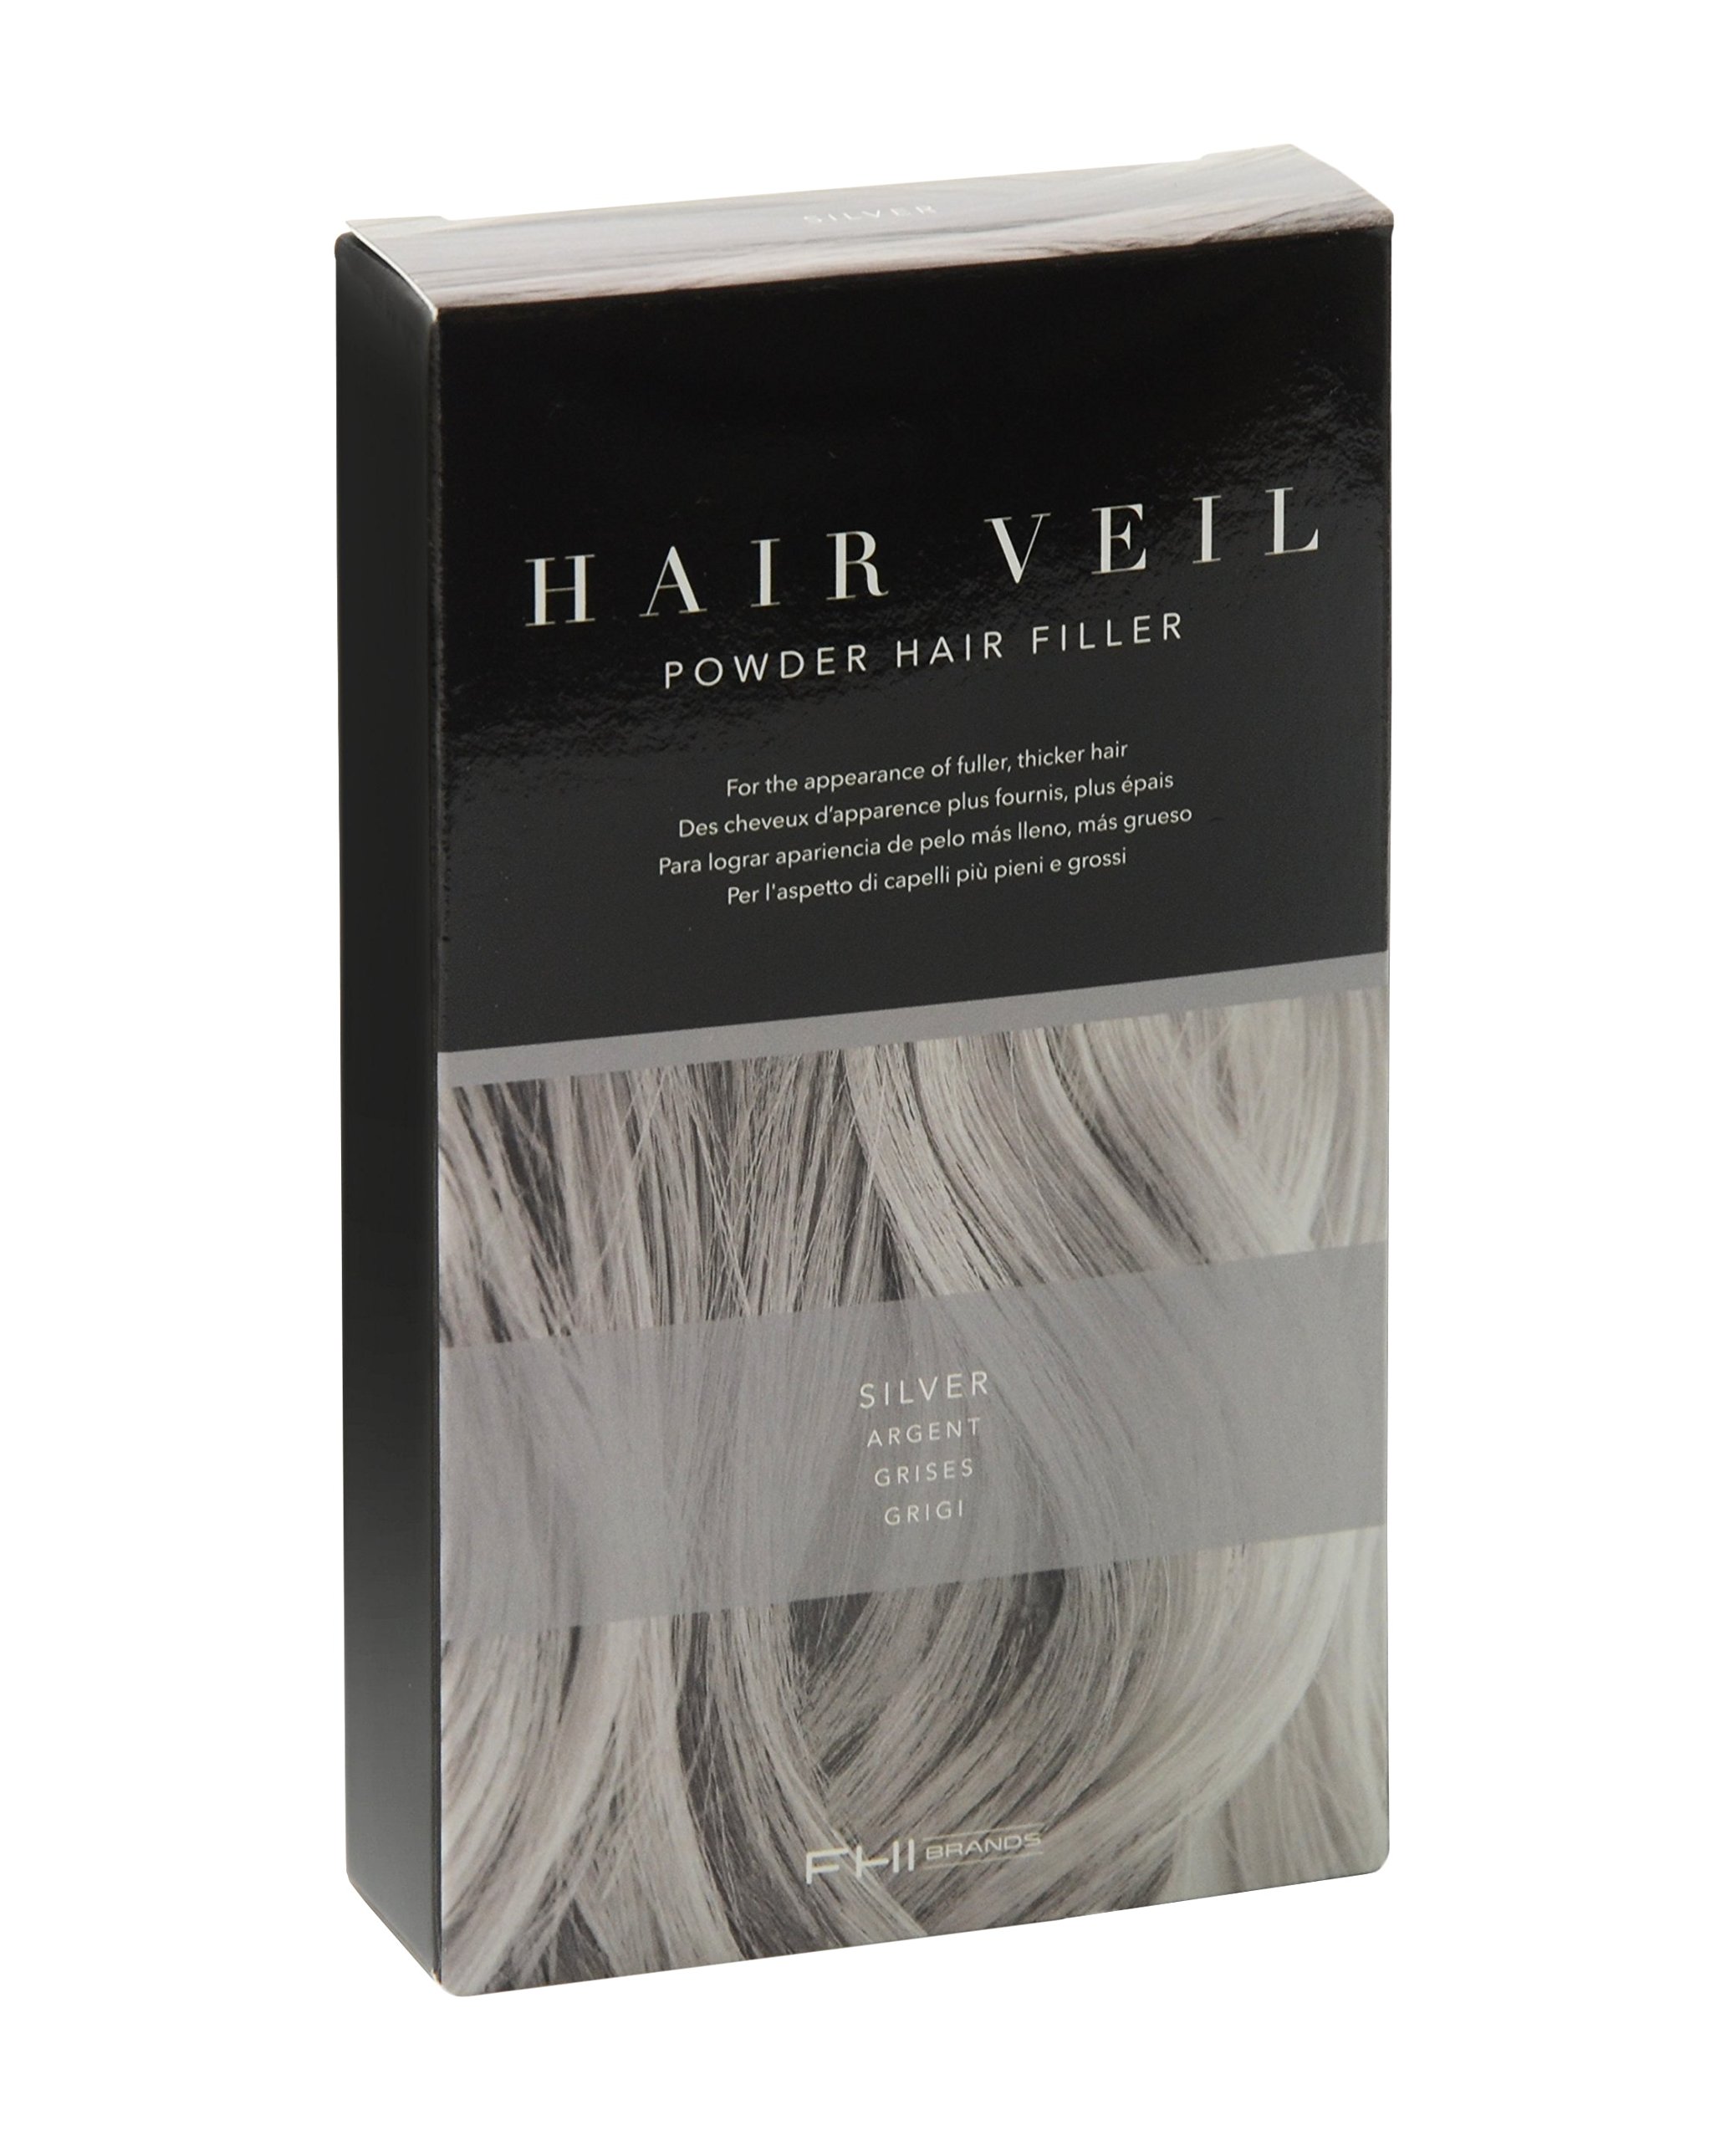 FHI Heat Hair Veil Powder Hair Filler, Salt & Pepper